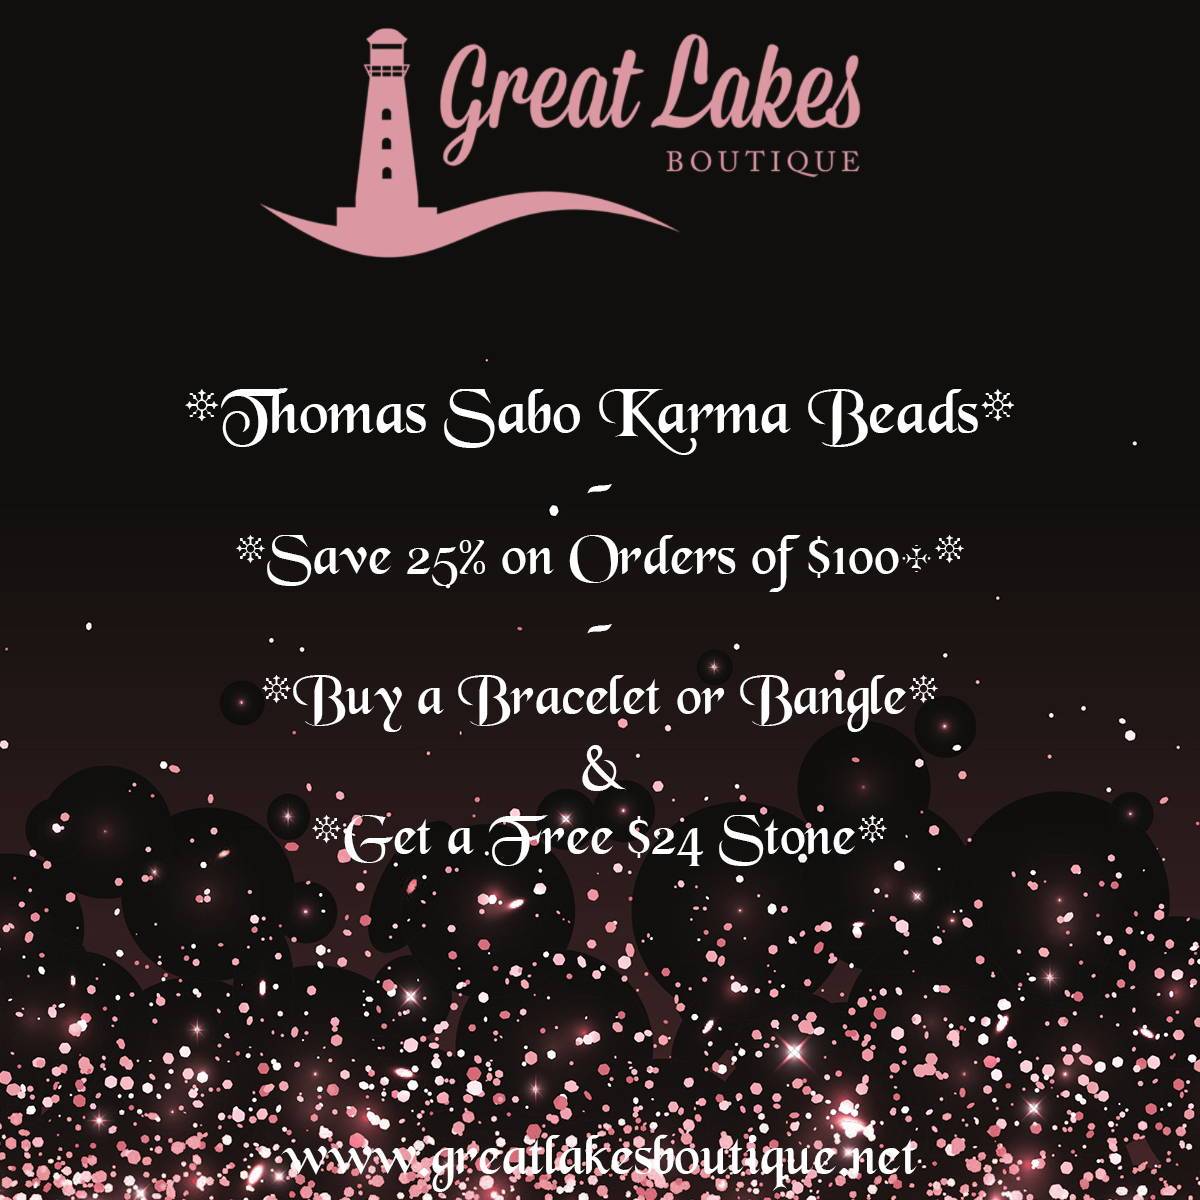 Thomas Sabo Karma Beads Black Friday 2020 Promotion